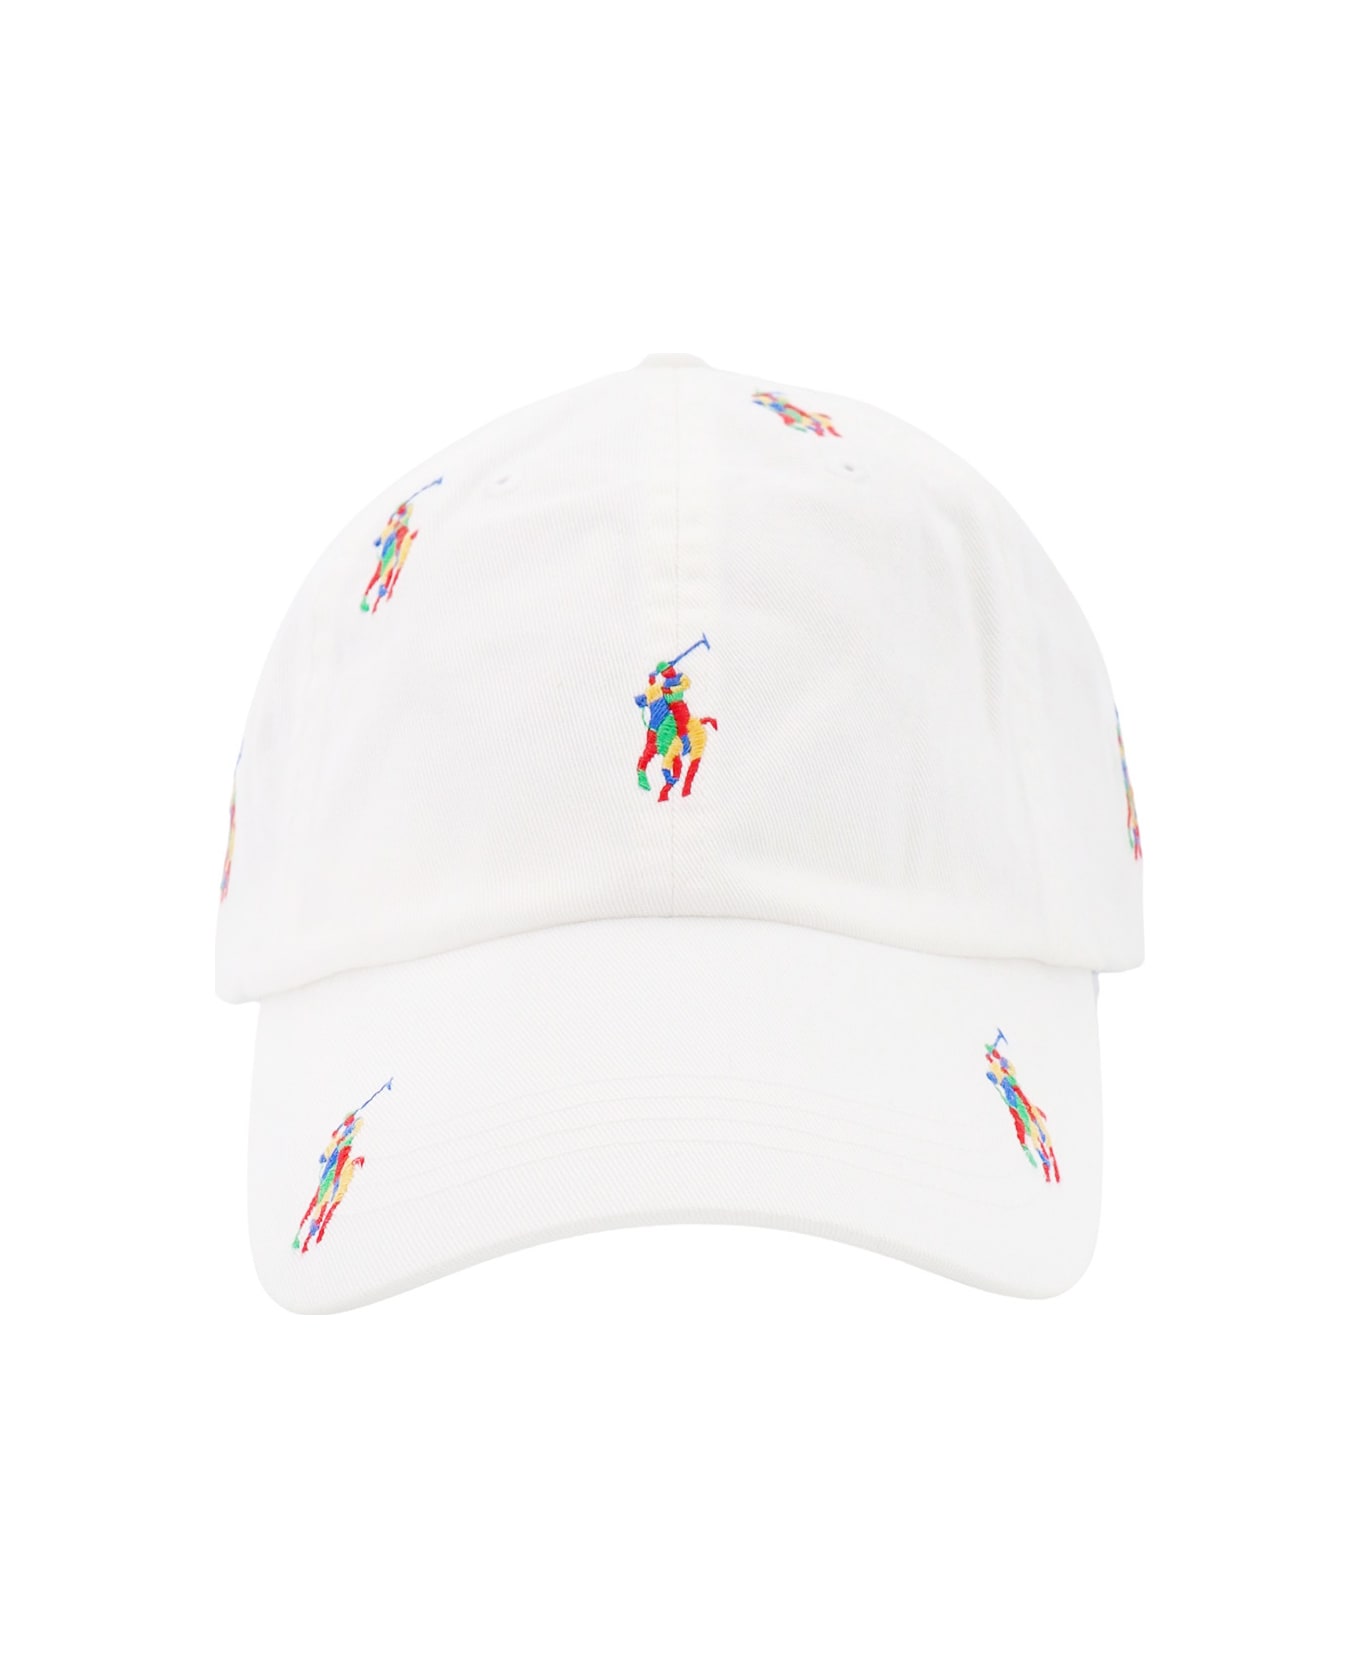 Polo Ralph Lauren Hat - White